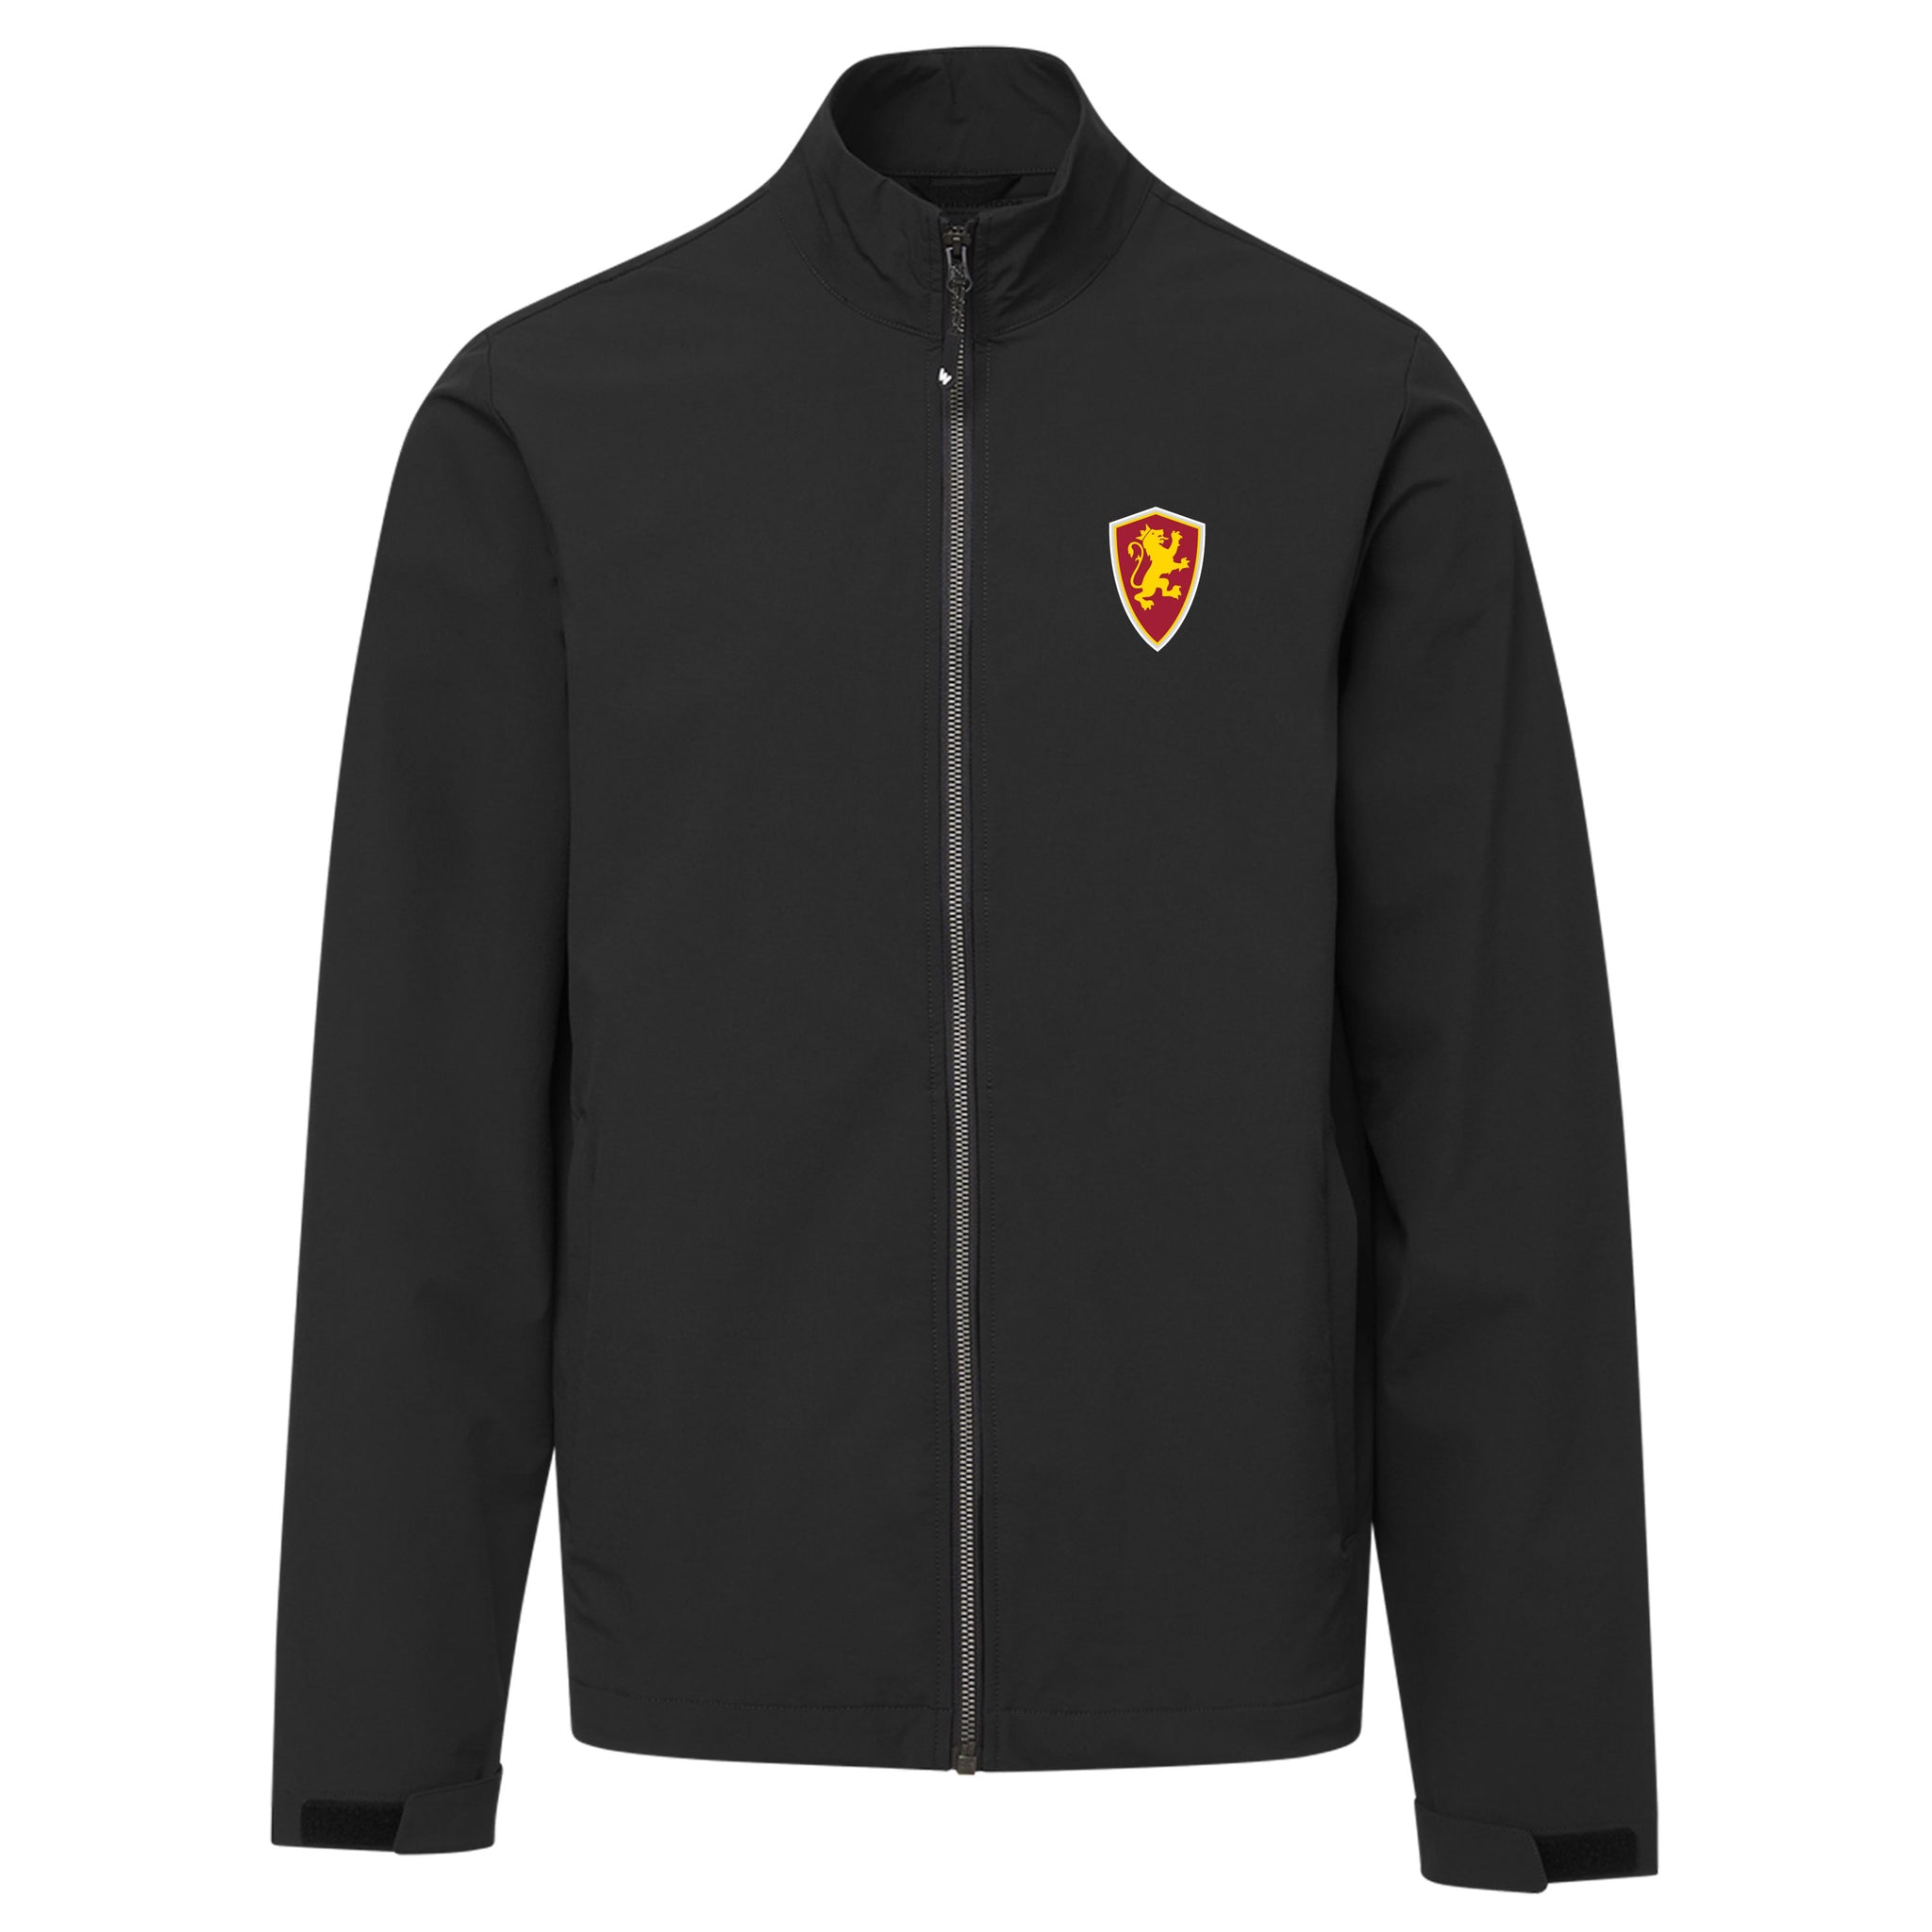 Black full zip jacket with Flagler College shield logo on left chest